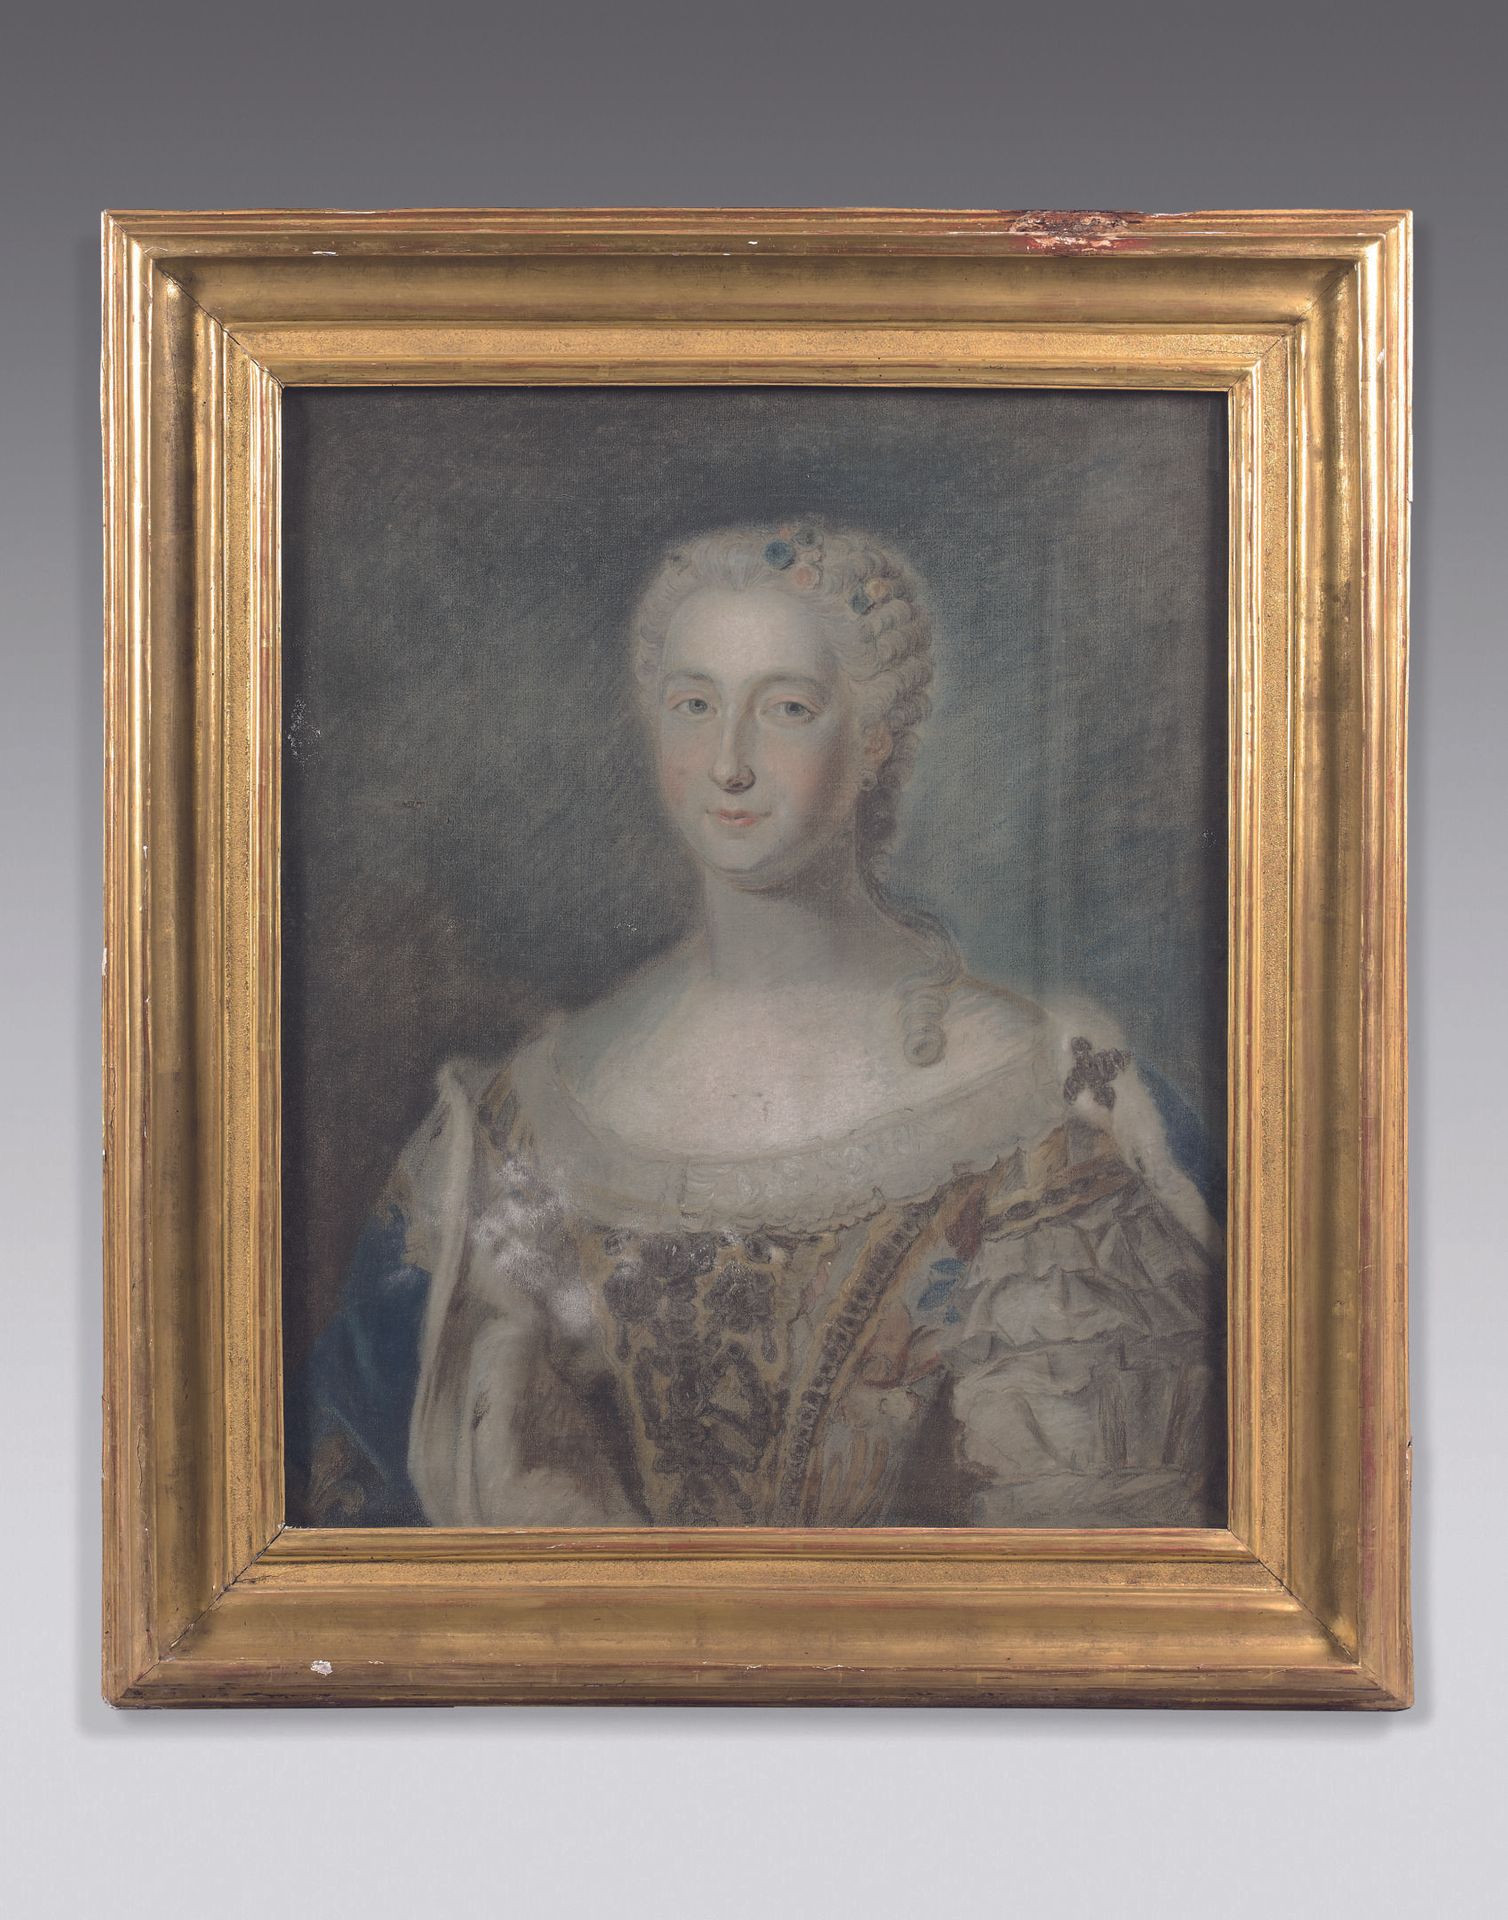 Null 19世纪法国学校
潘蒂耶夫公爵夫人玛丽-泰雷兹-菲利克特-埃斯特的画像
布面油画。
70 x 40厘米
注释：229之三
出处 :
原奥尔良公爵在欧堡&hellip;